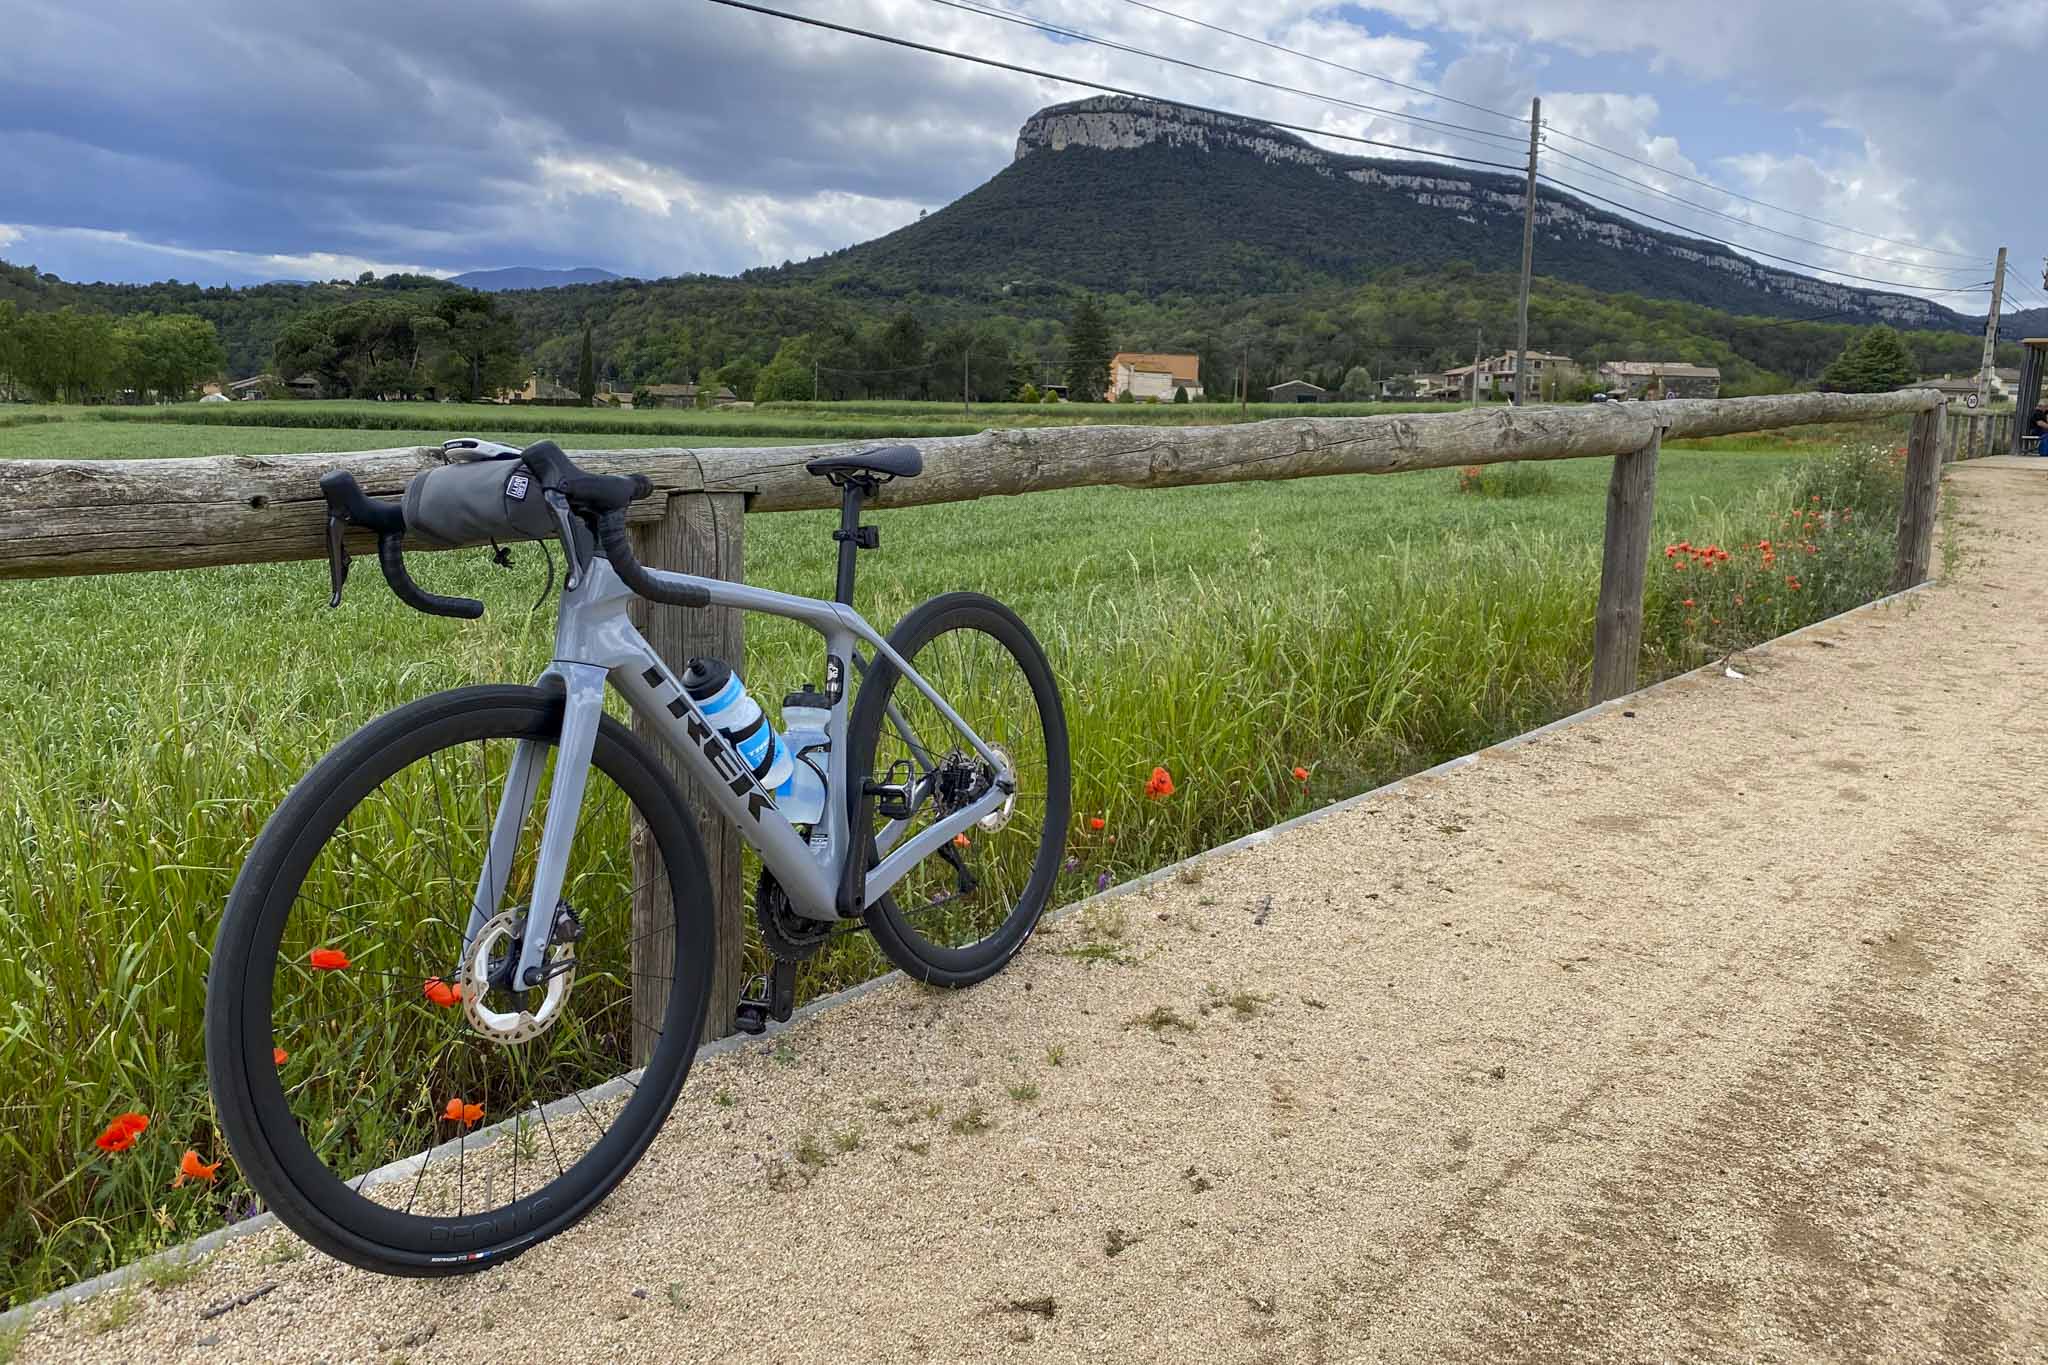 New Trek Madone near Girona, Spain on a Trek Travel ride camp.